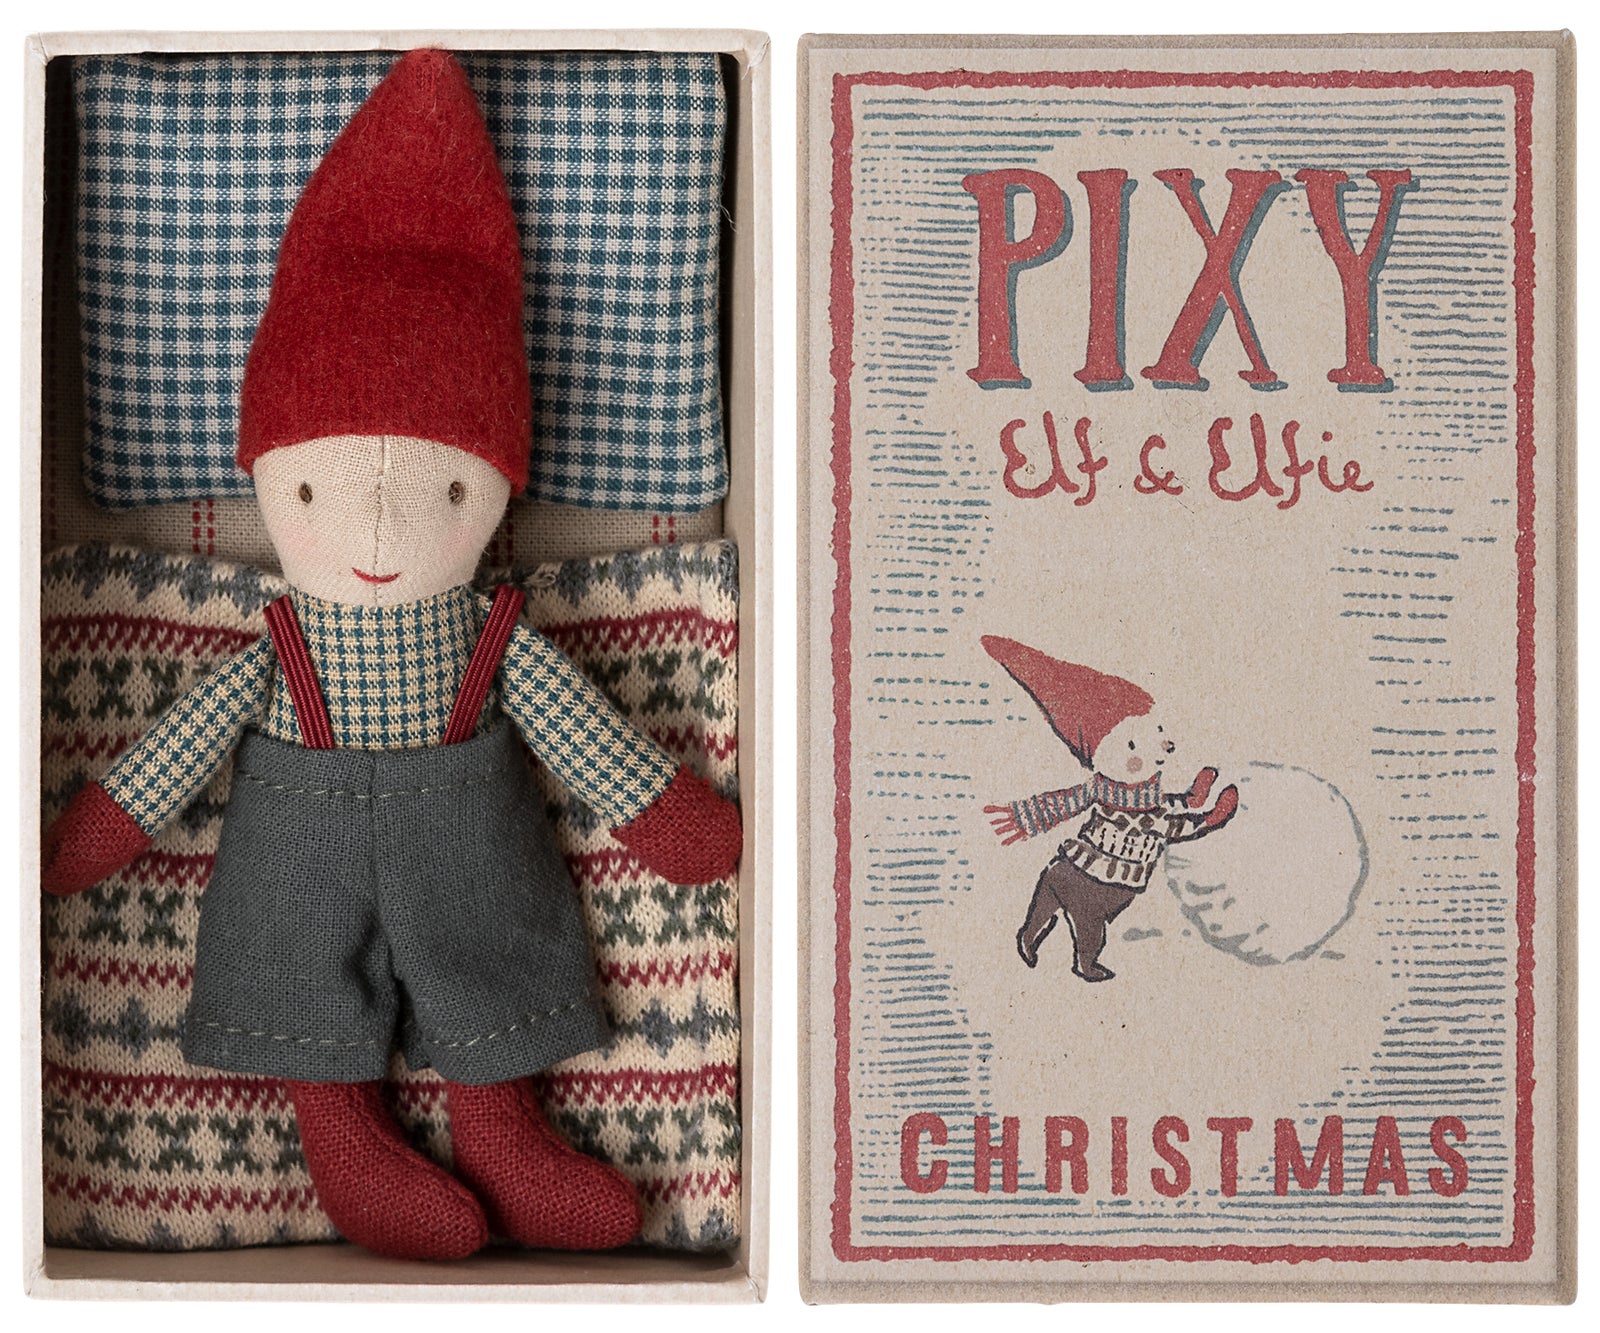 Pixy Elf in Matchbox | Maileg Design | Miss Arthur | Home Goods | Tasmania